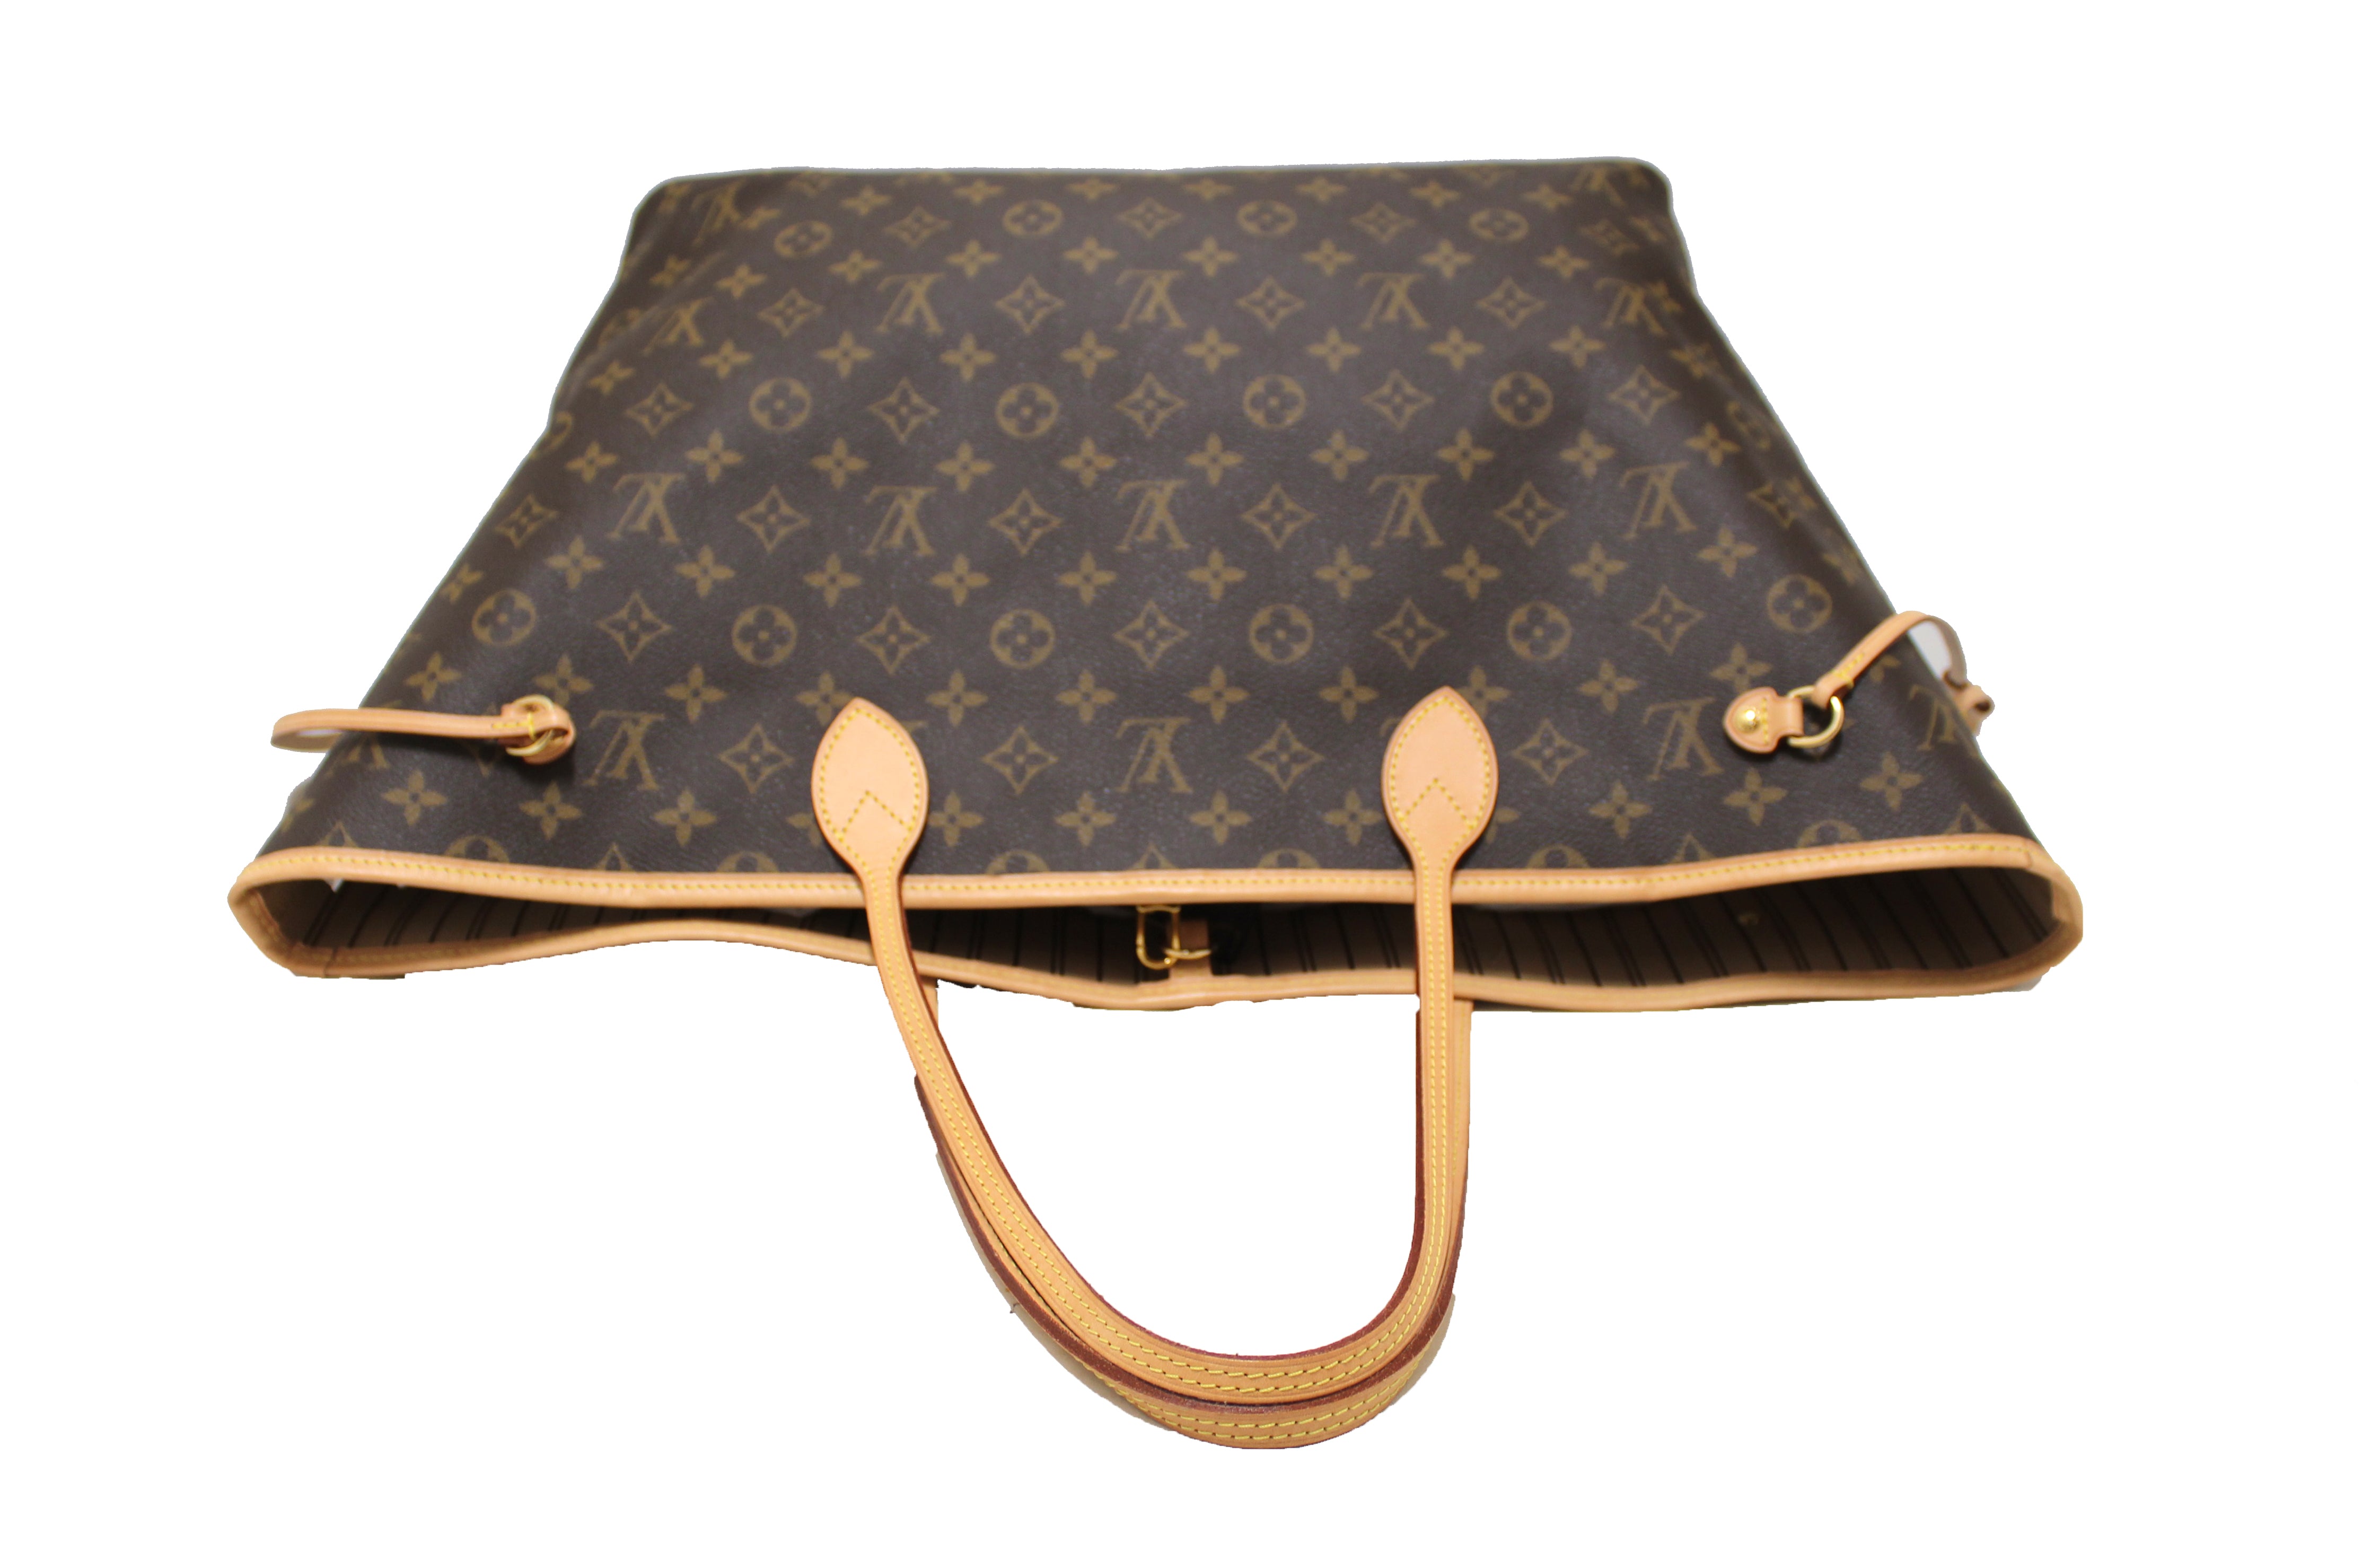 Authentic Louis Vuitton Classic Monogram Neverfull GM Tote Shoulder Bag